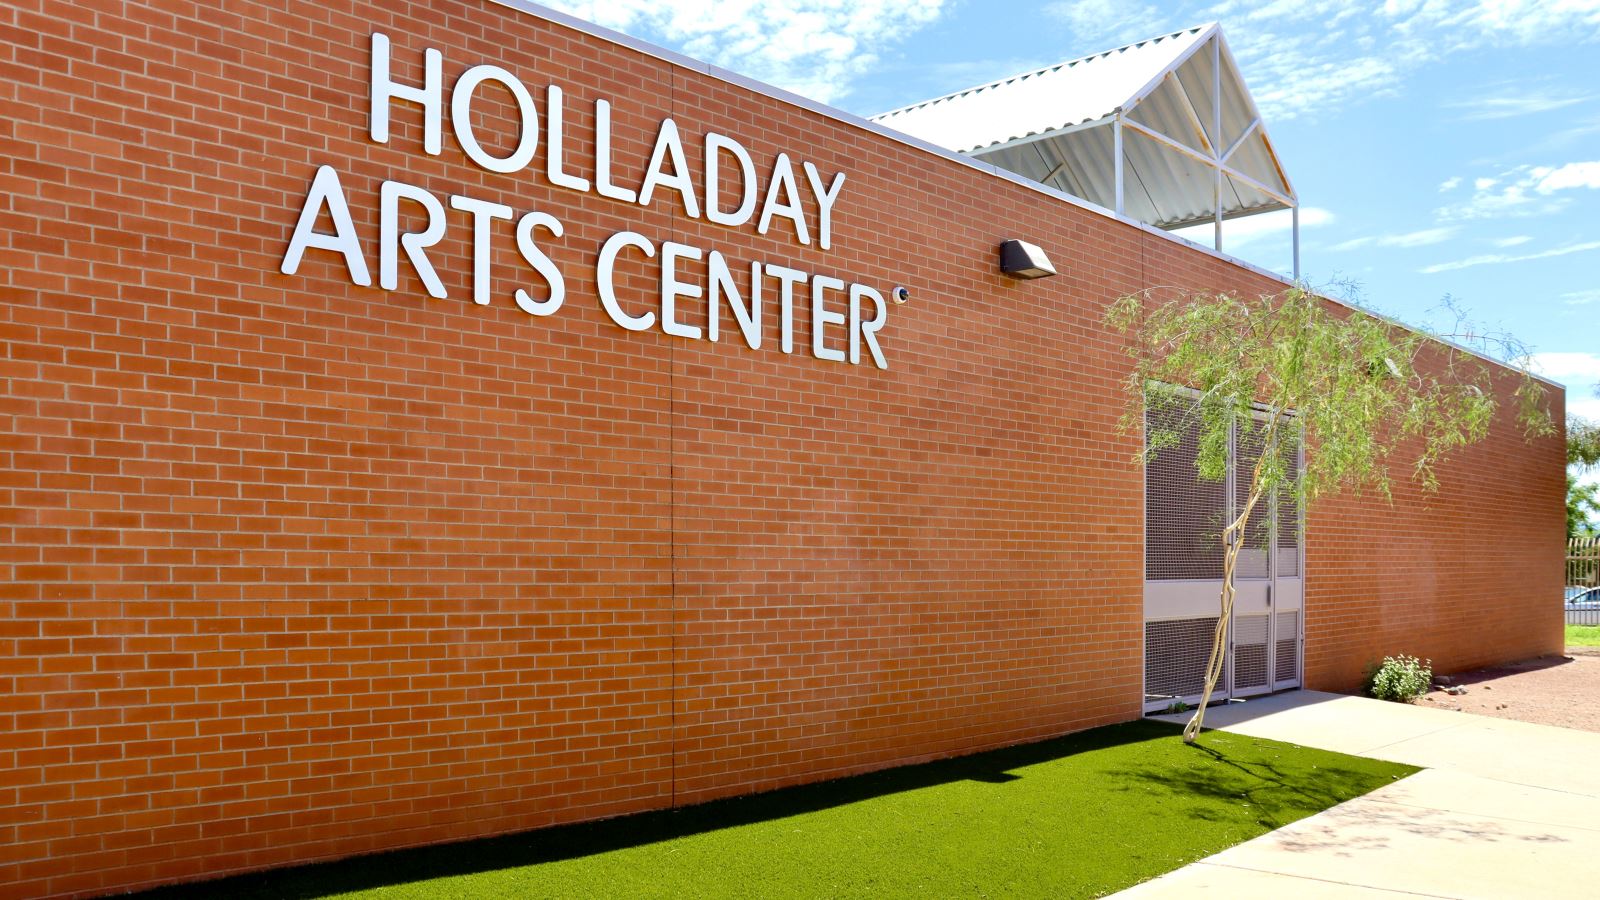 Holladay Arts Center Building.